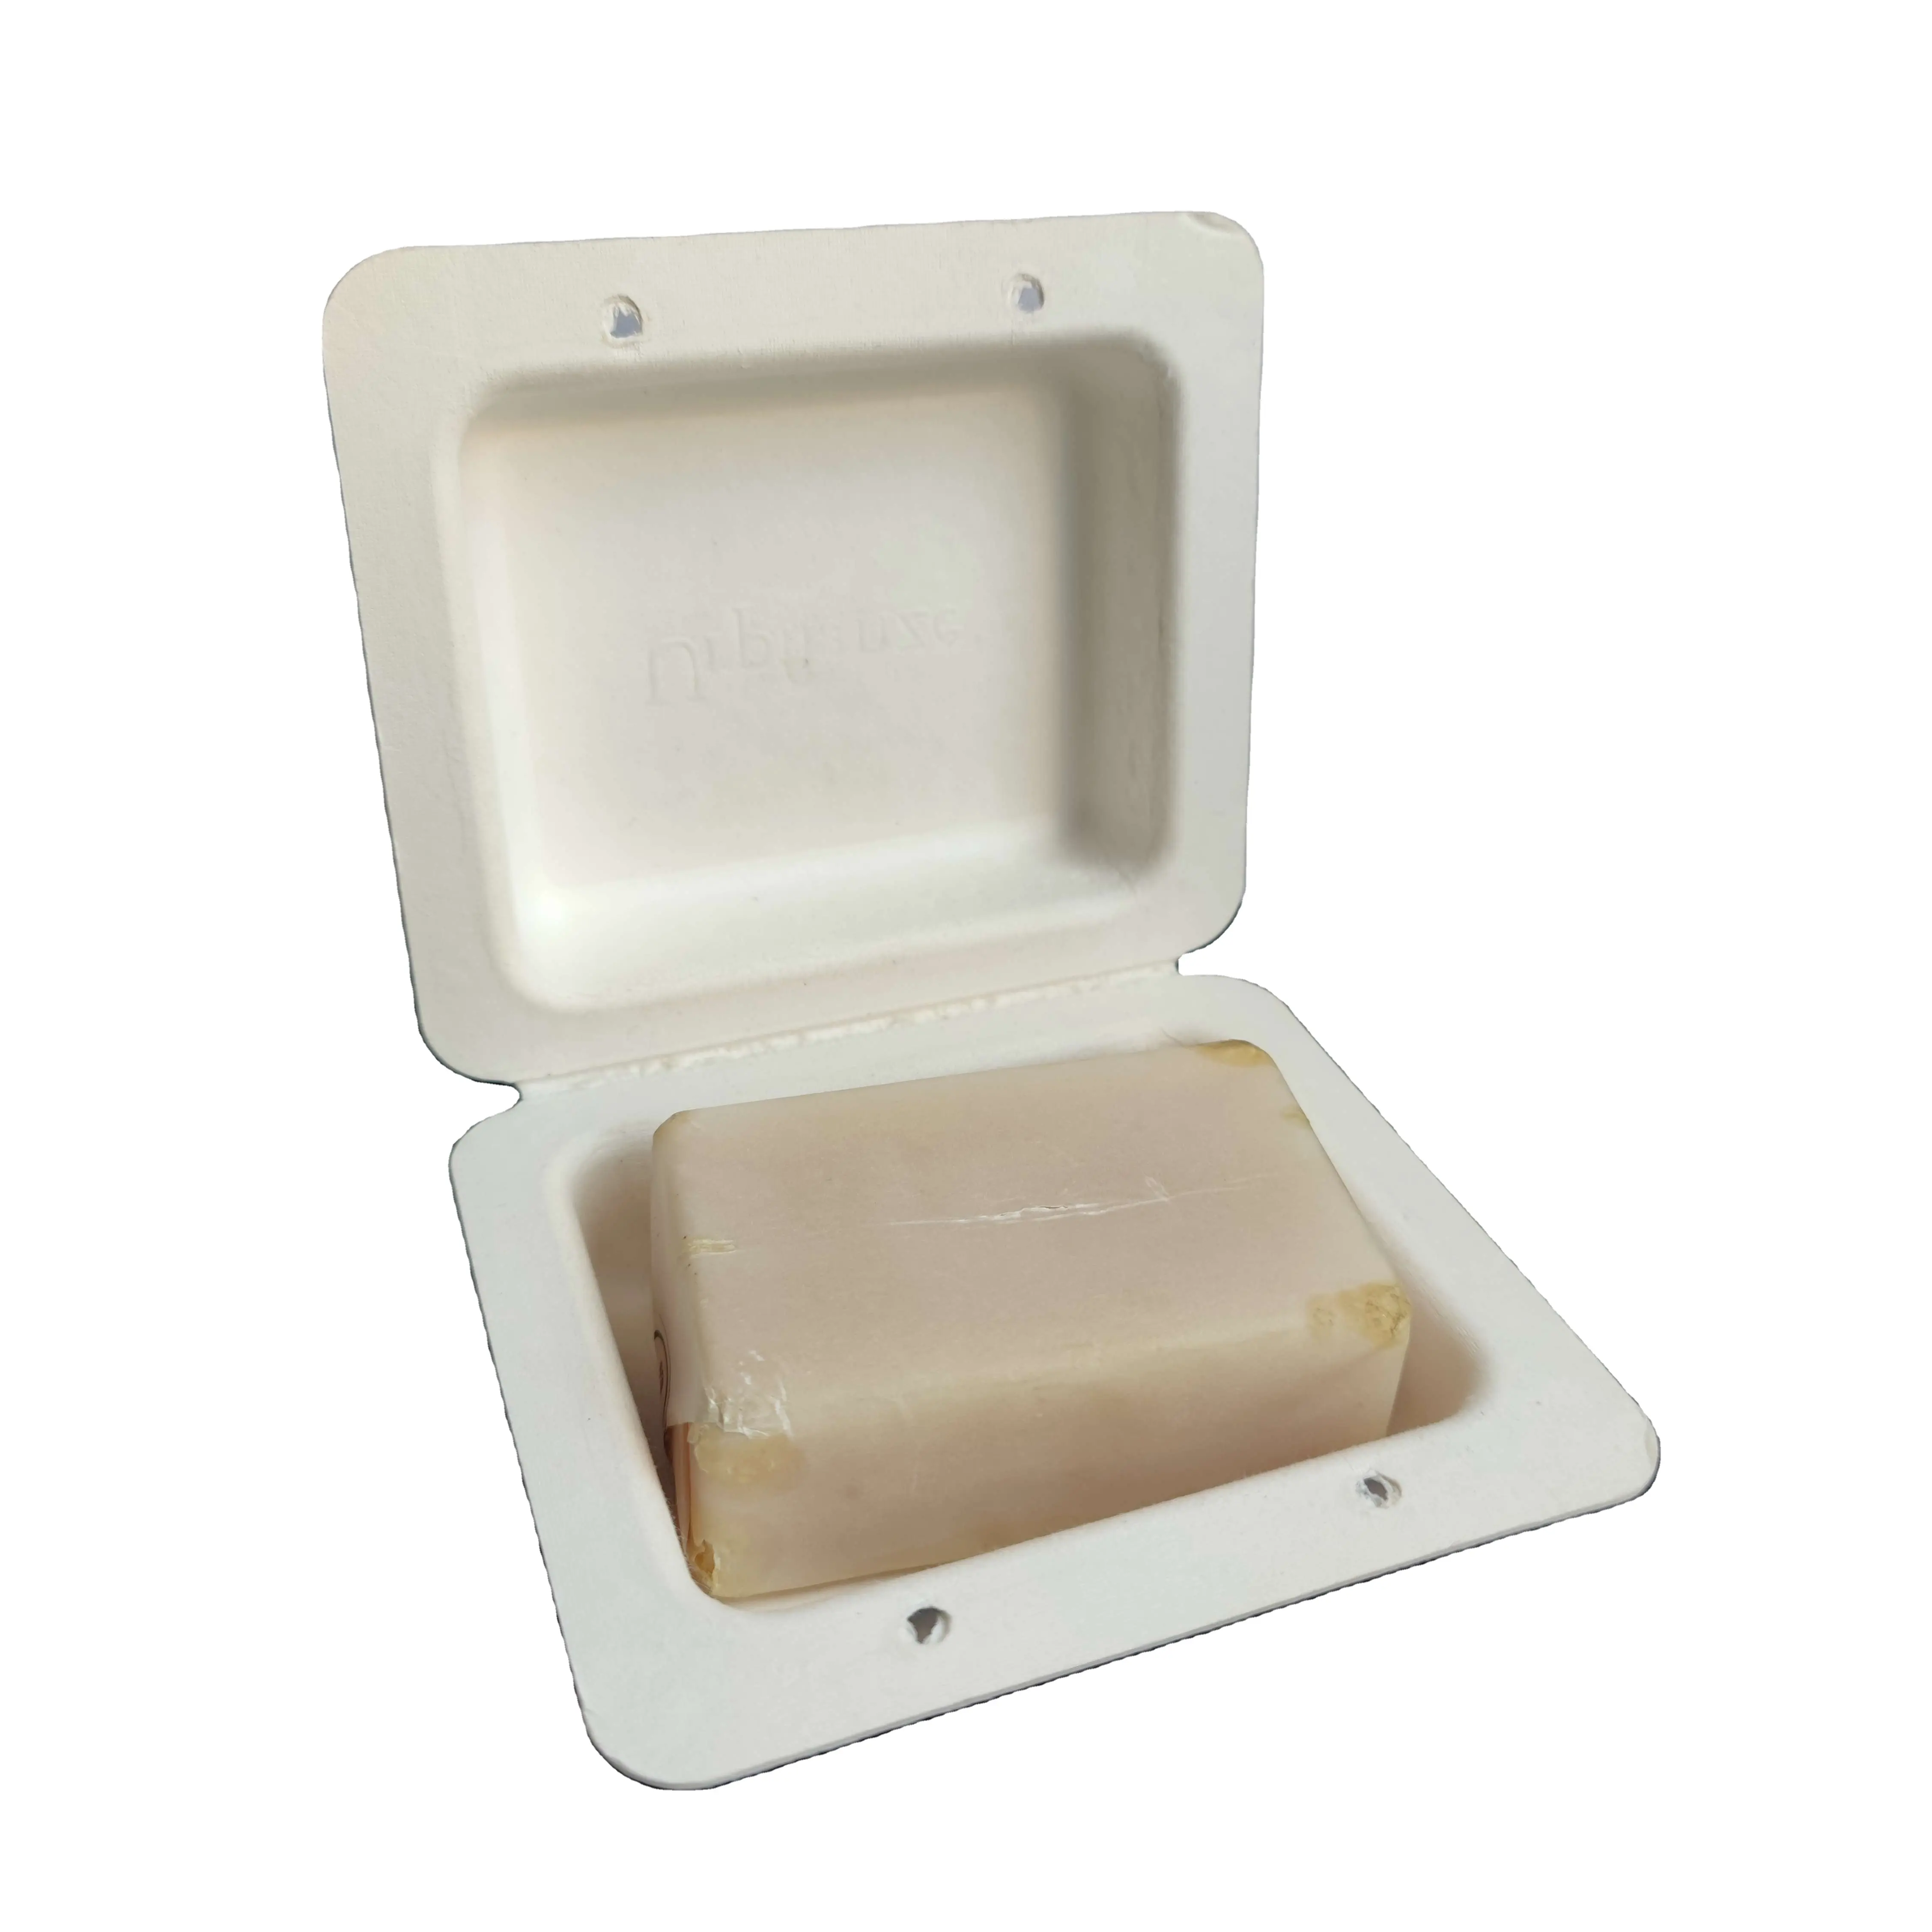 Seifen verpackung, geformte Zellstoffs chale biologisch abbaubare Zellstoff box kunden spezifische Papier box verpackung